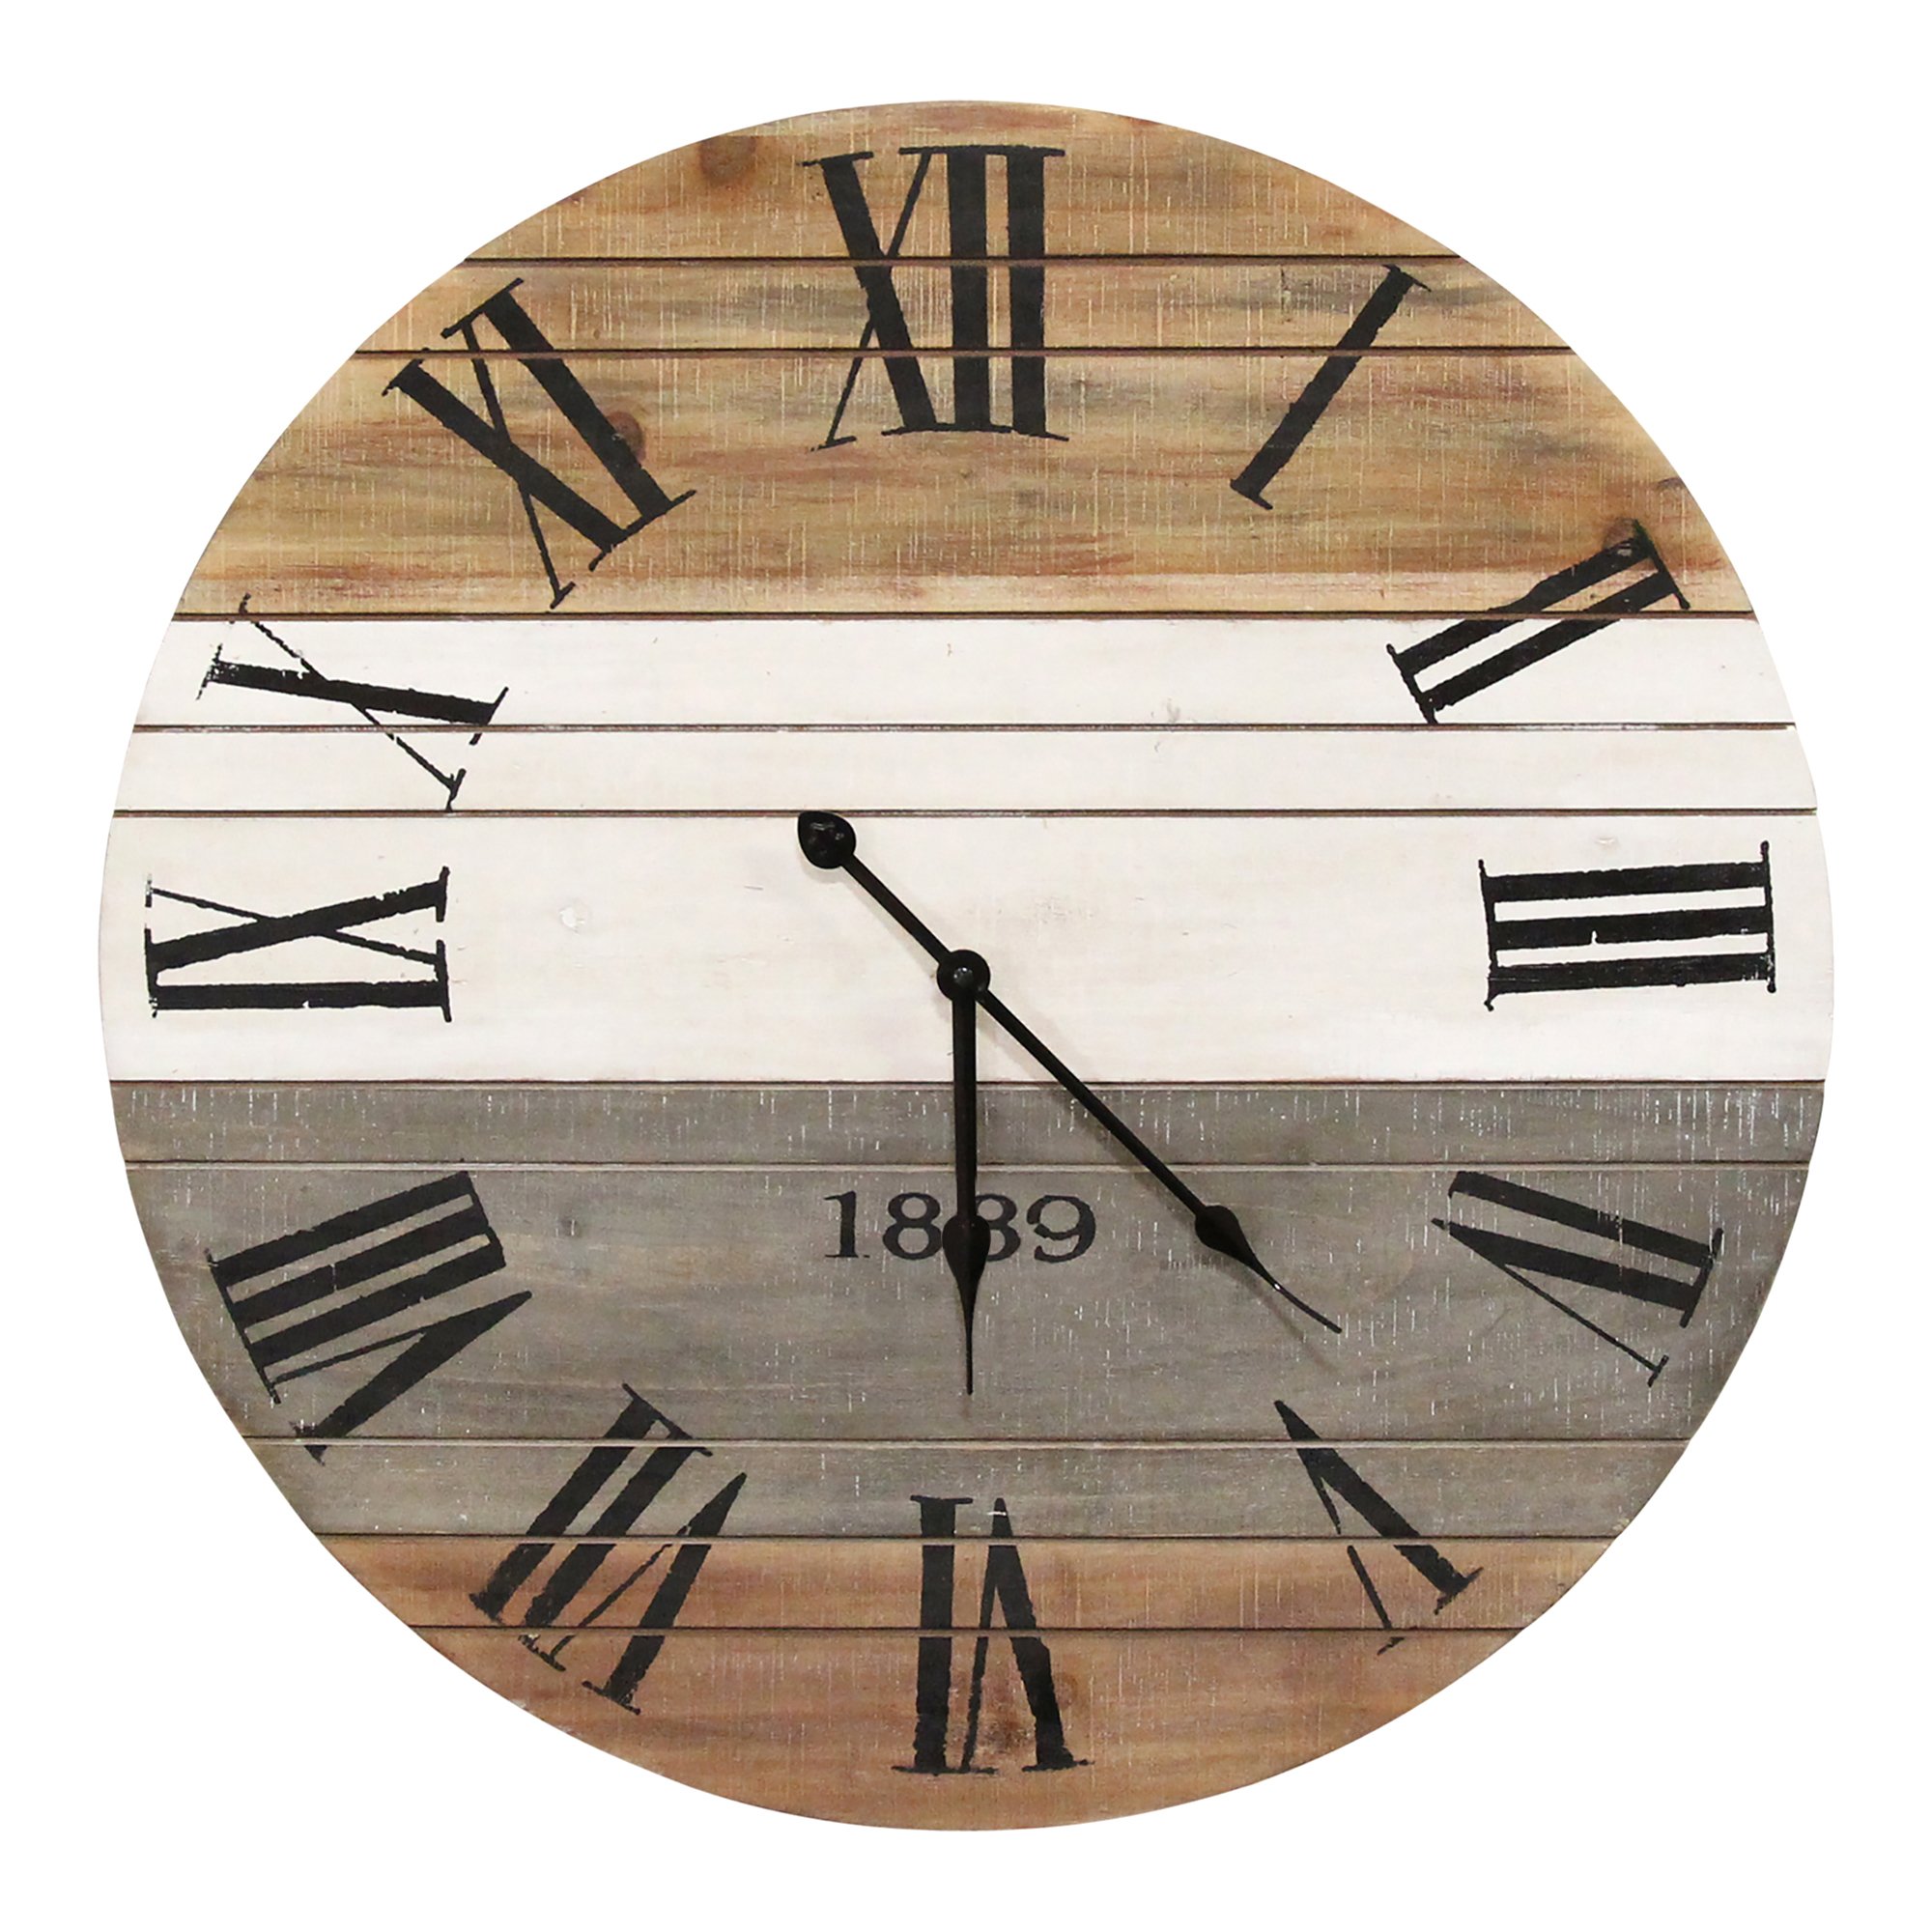 21" Round Distressed Wood-Grain Whitewash / Wall Clock